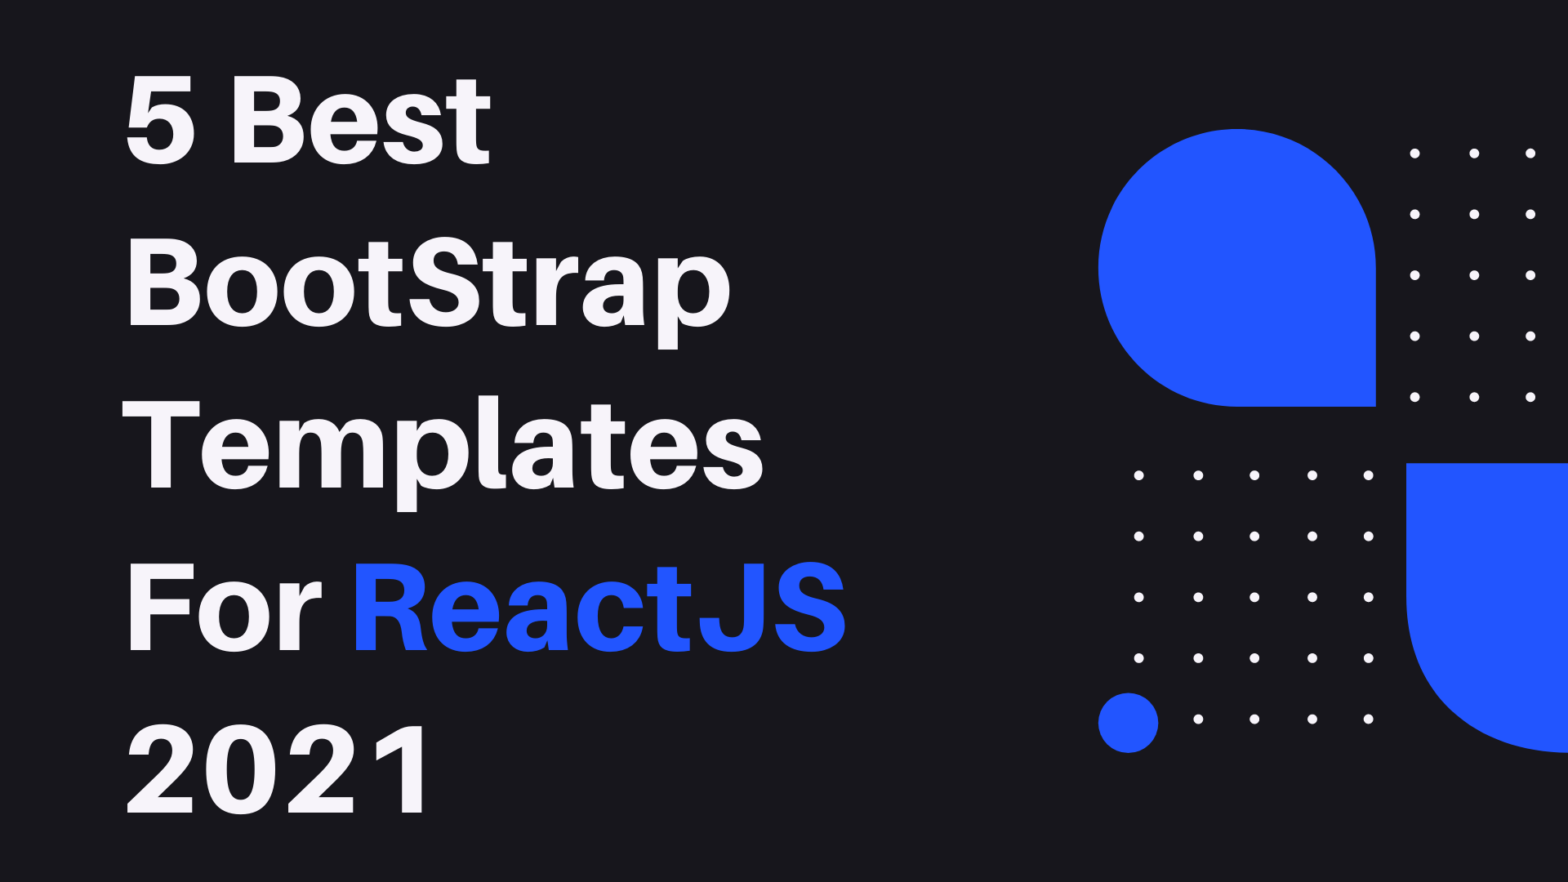 5 Best BootStrap Templates For ReactJS 2021